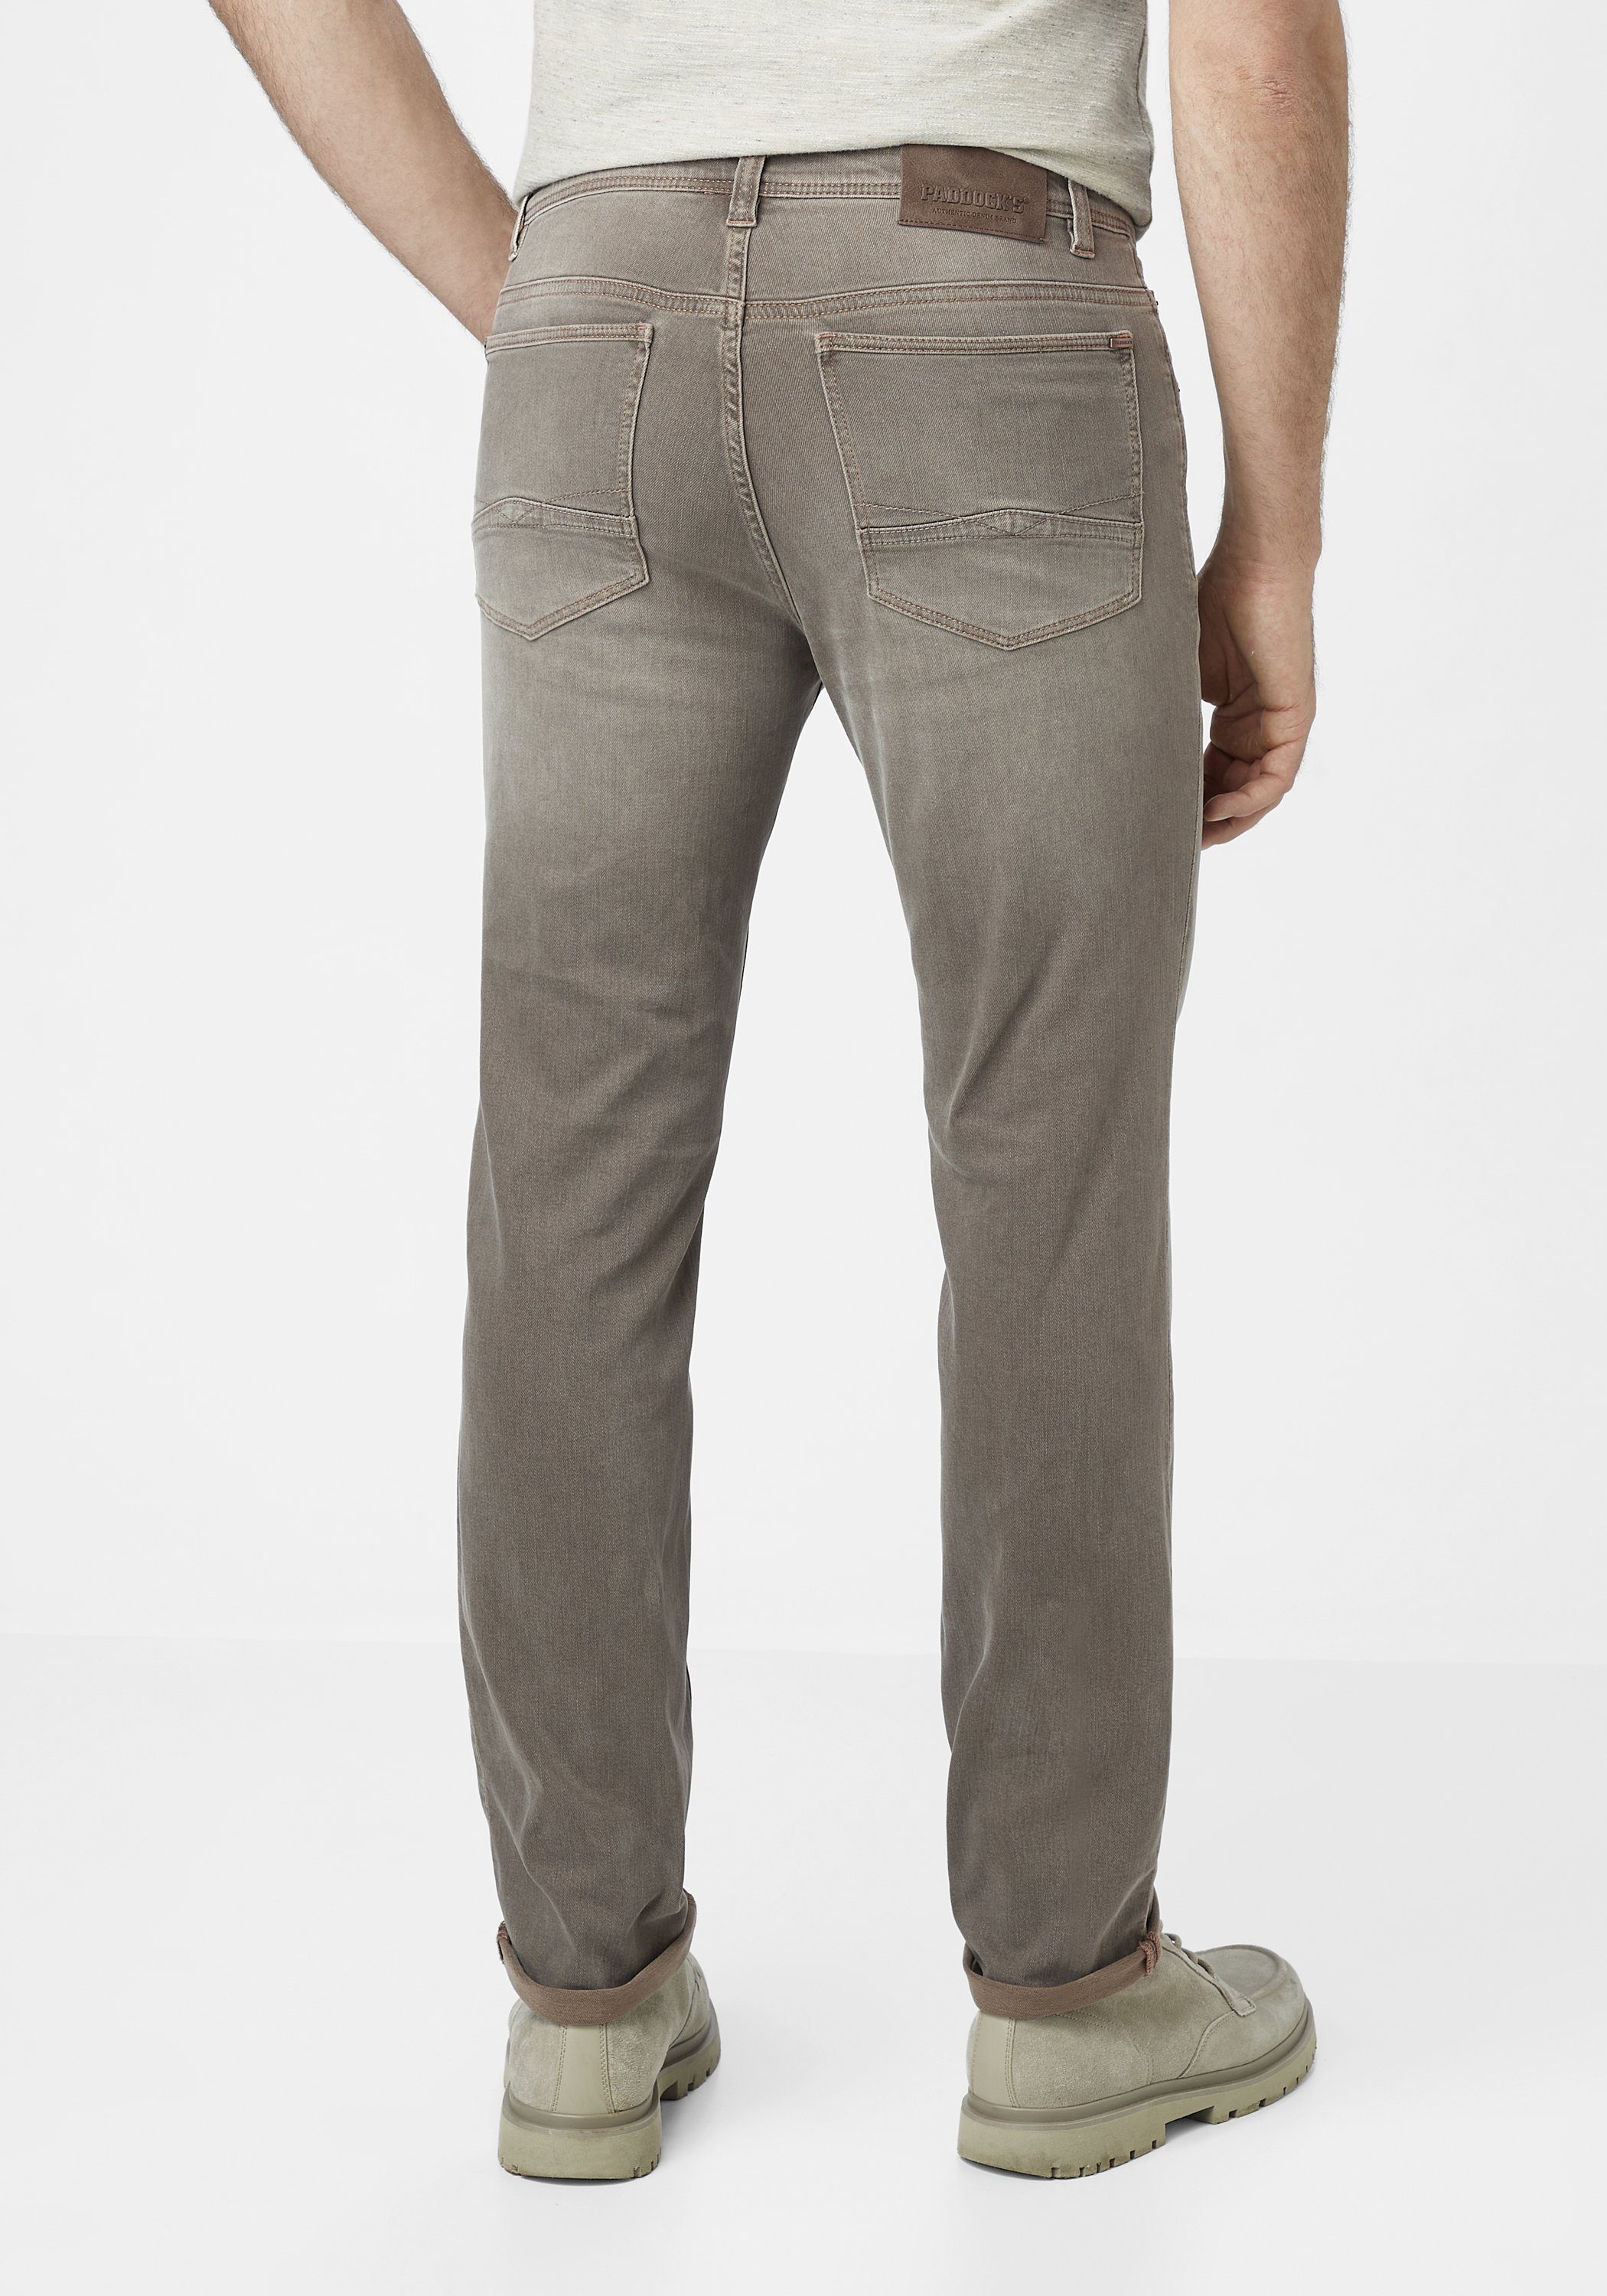 mit & PIPE Jeans Paddock's Motion Stretch Slim-fit-Jeans 5-Pocket Comfort